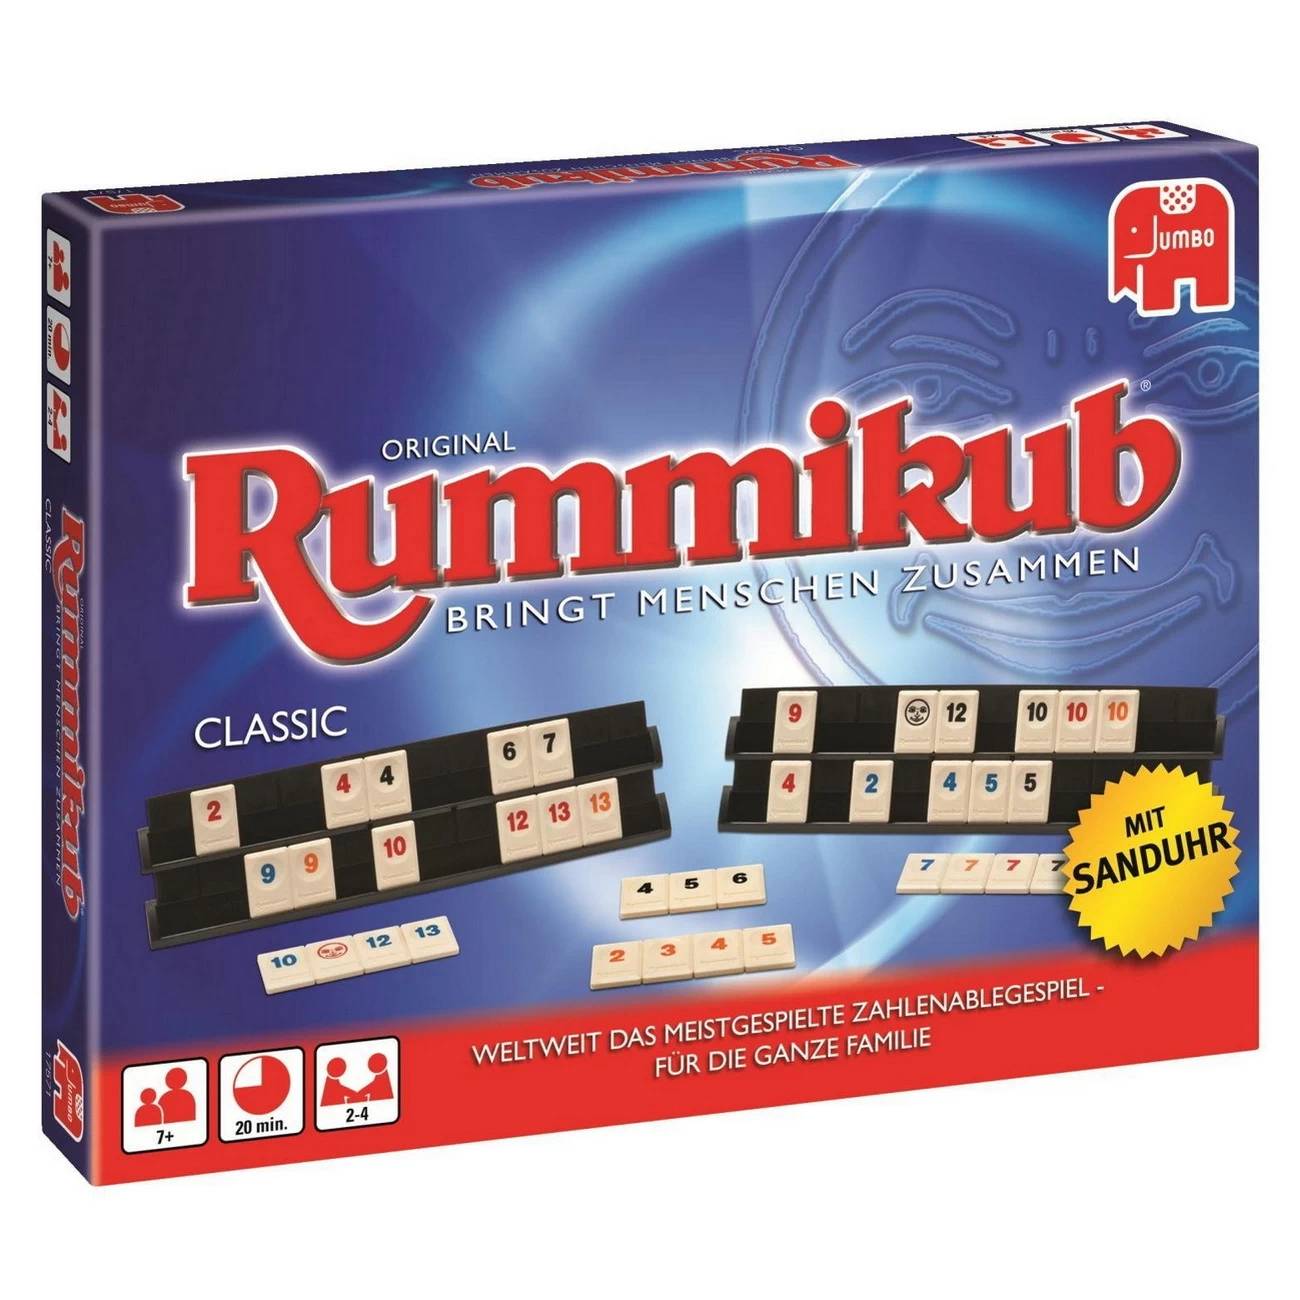 Original Rummikub Classic (Jumbo 17571)